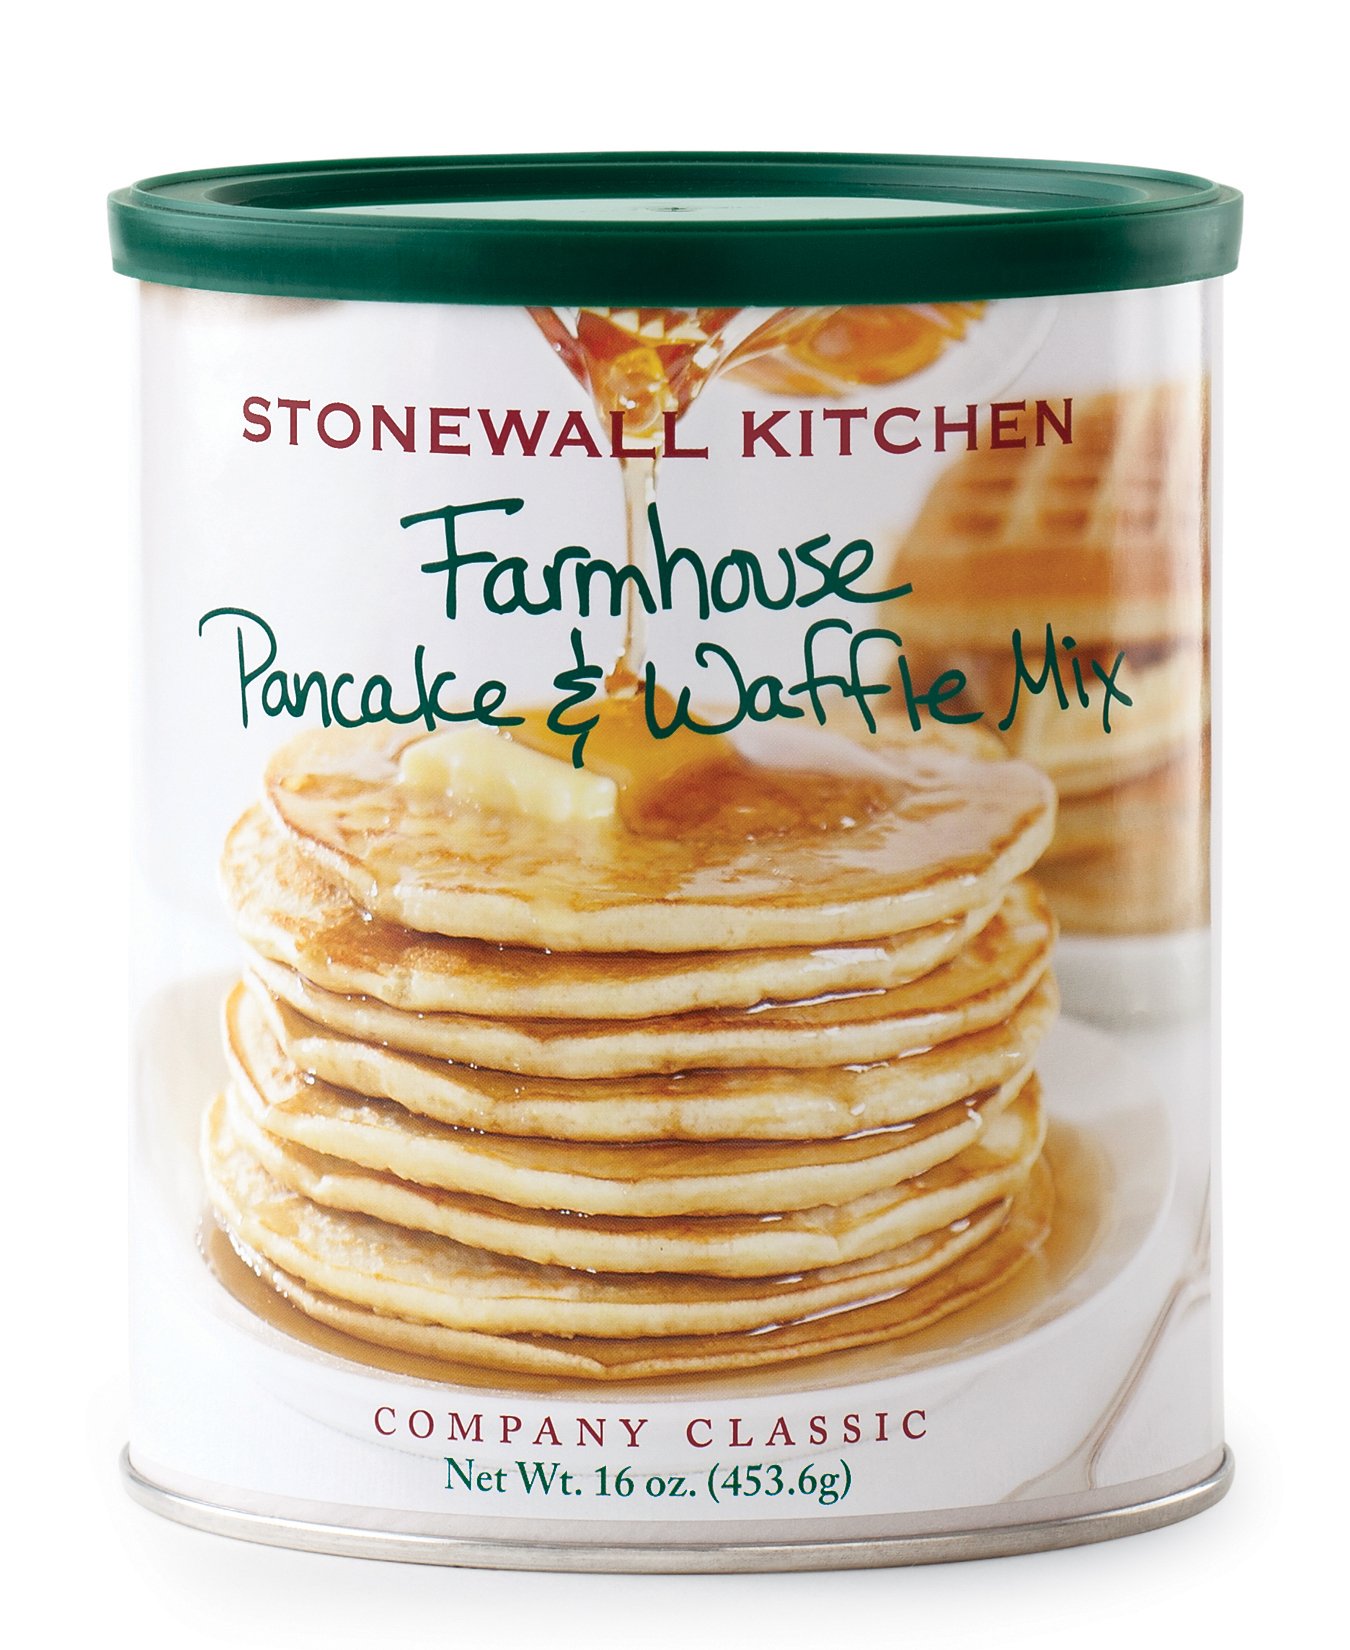 Stonewall Kitchen Farmhouse Pancake Waffle Mix Shop Cereal Breakfast At H E B